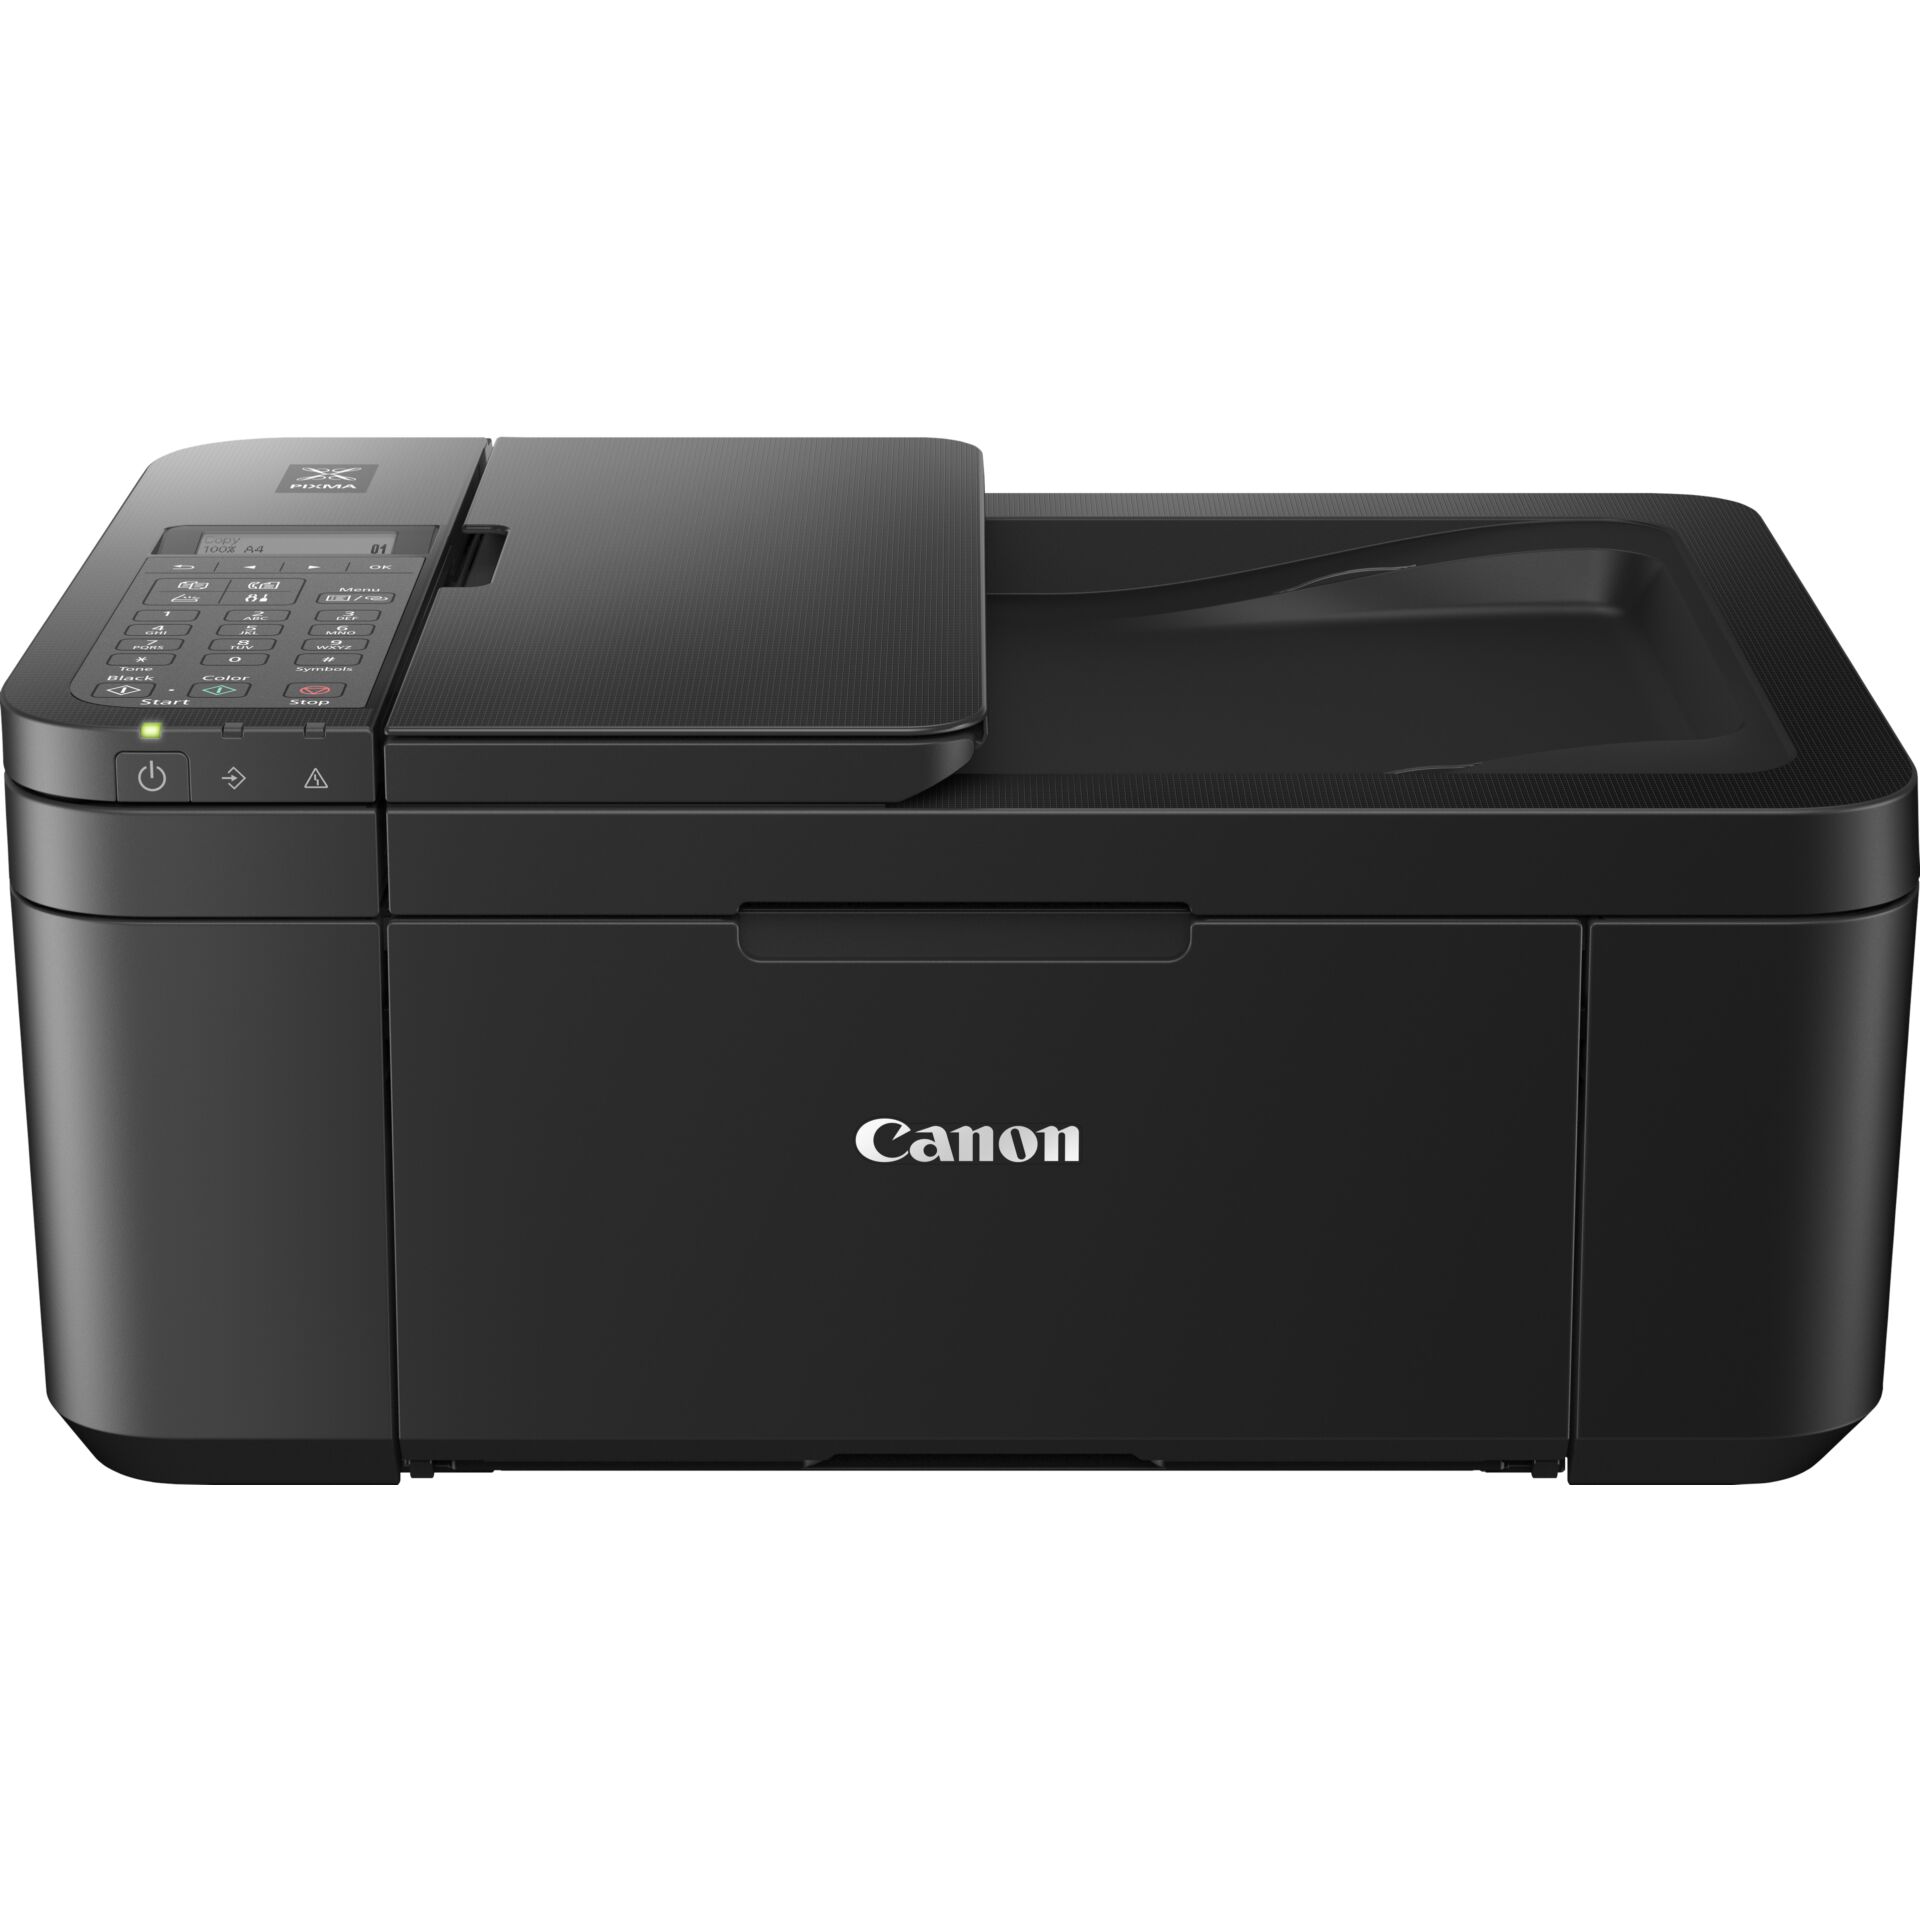 Canon PIXMA TR4650 schwarz, WLAN, Tinte, mehrfarbig-Multifun Drucker/Scanner/Kopierer/Fax